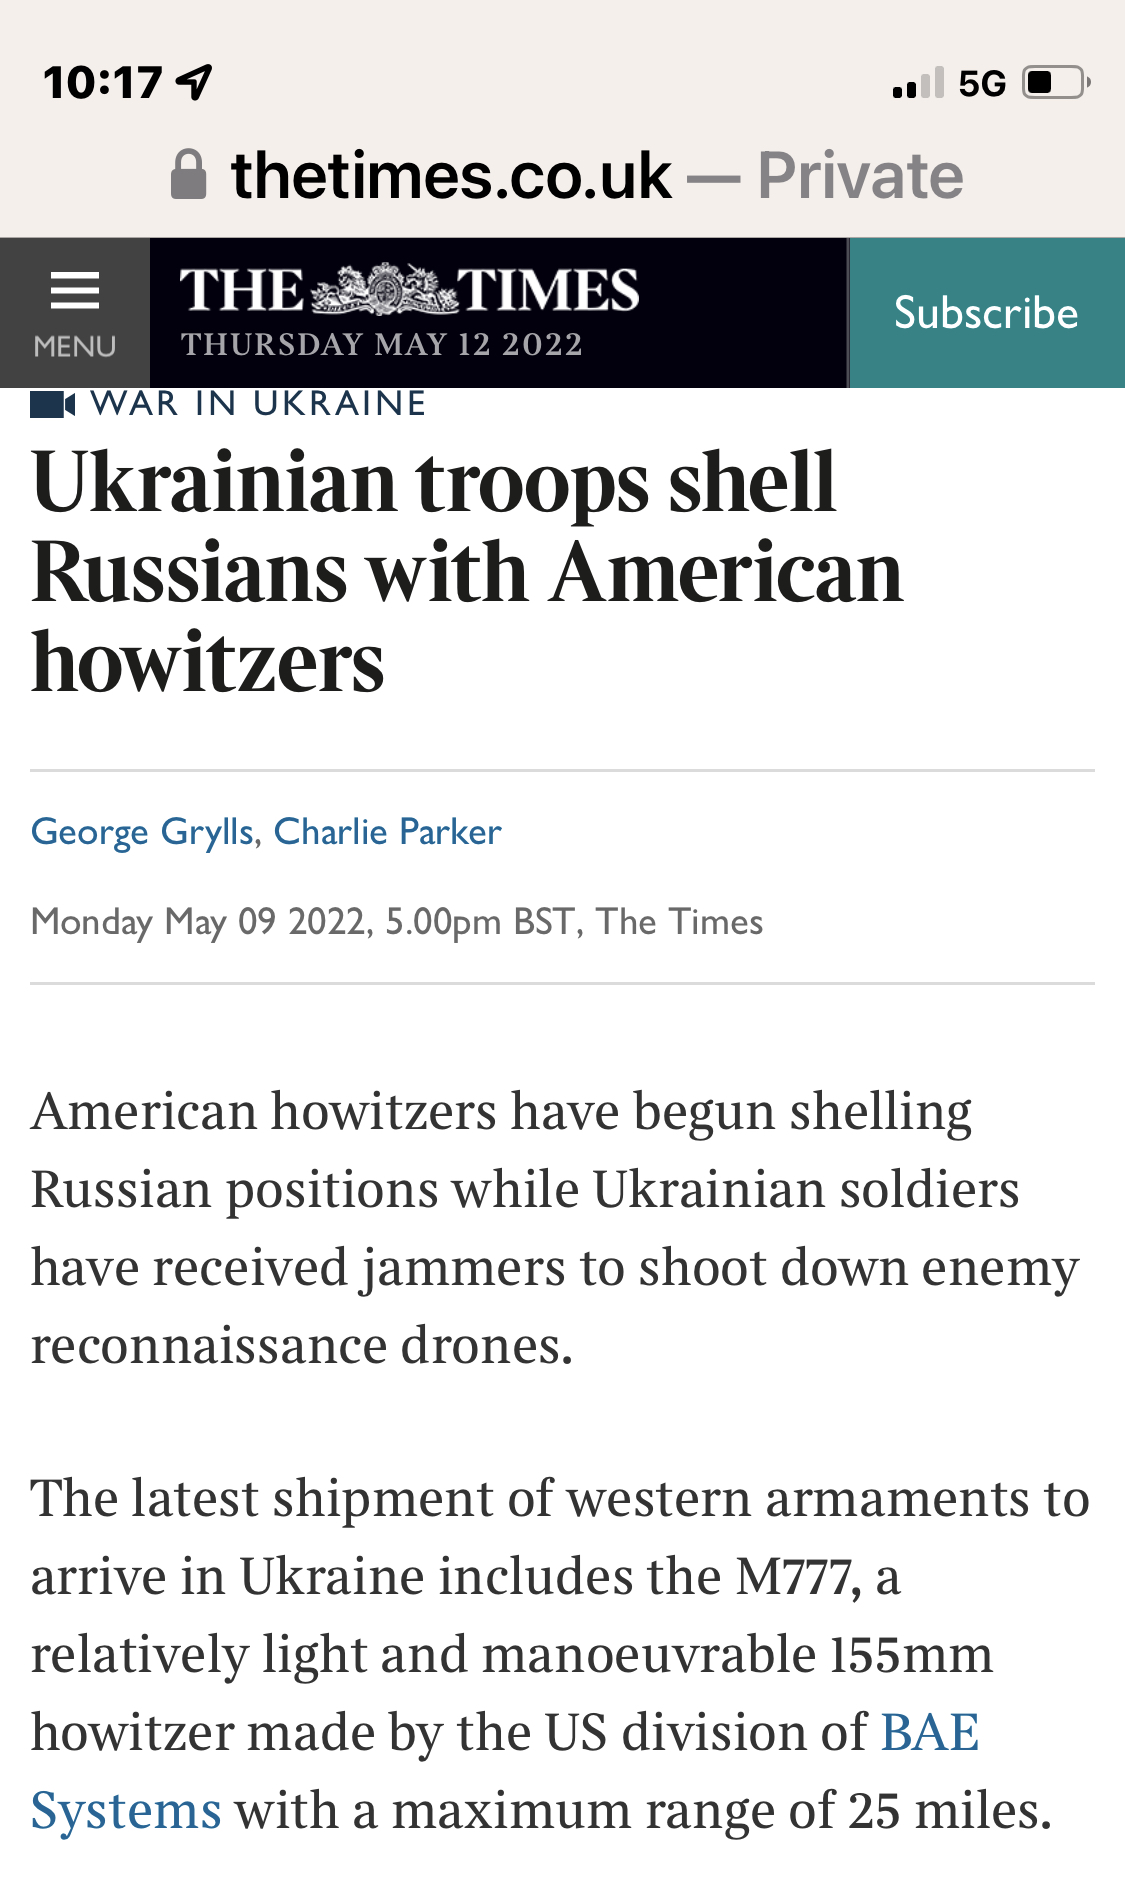 US Howizers live in Ukraine